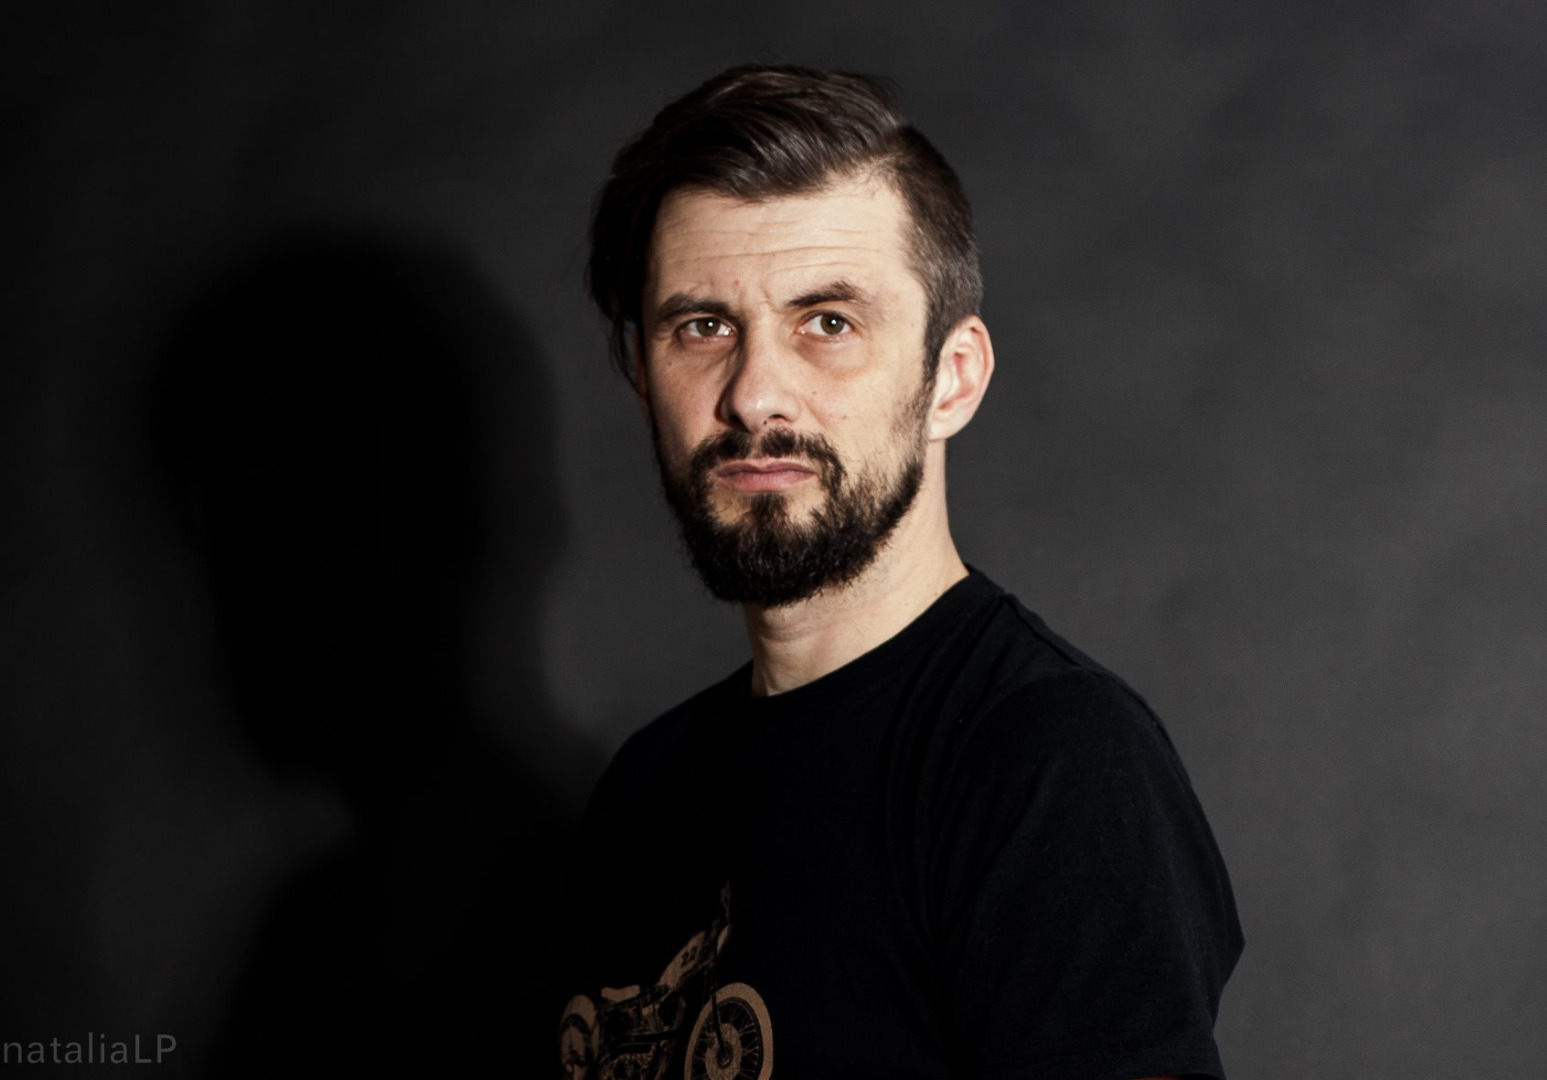 Agencja Gudejko: Marcin Chabowski